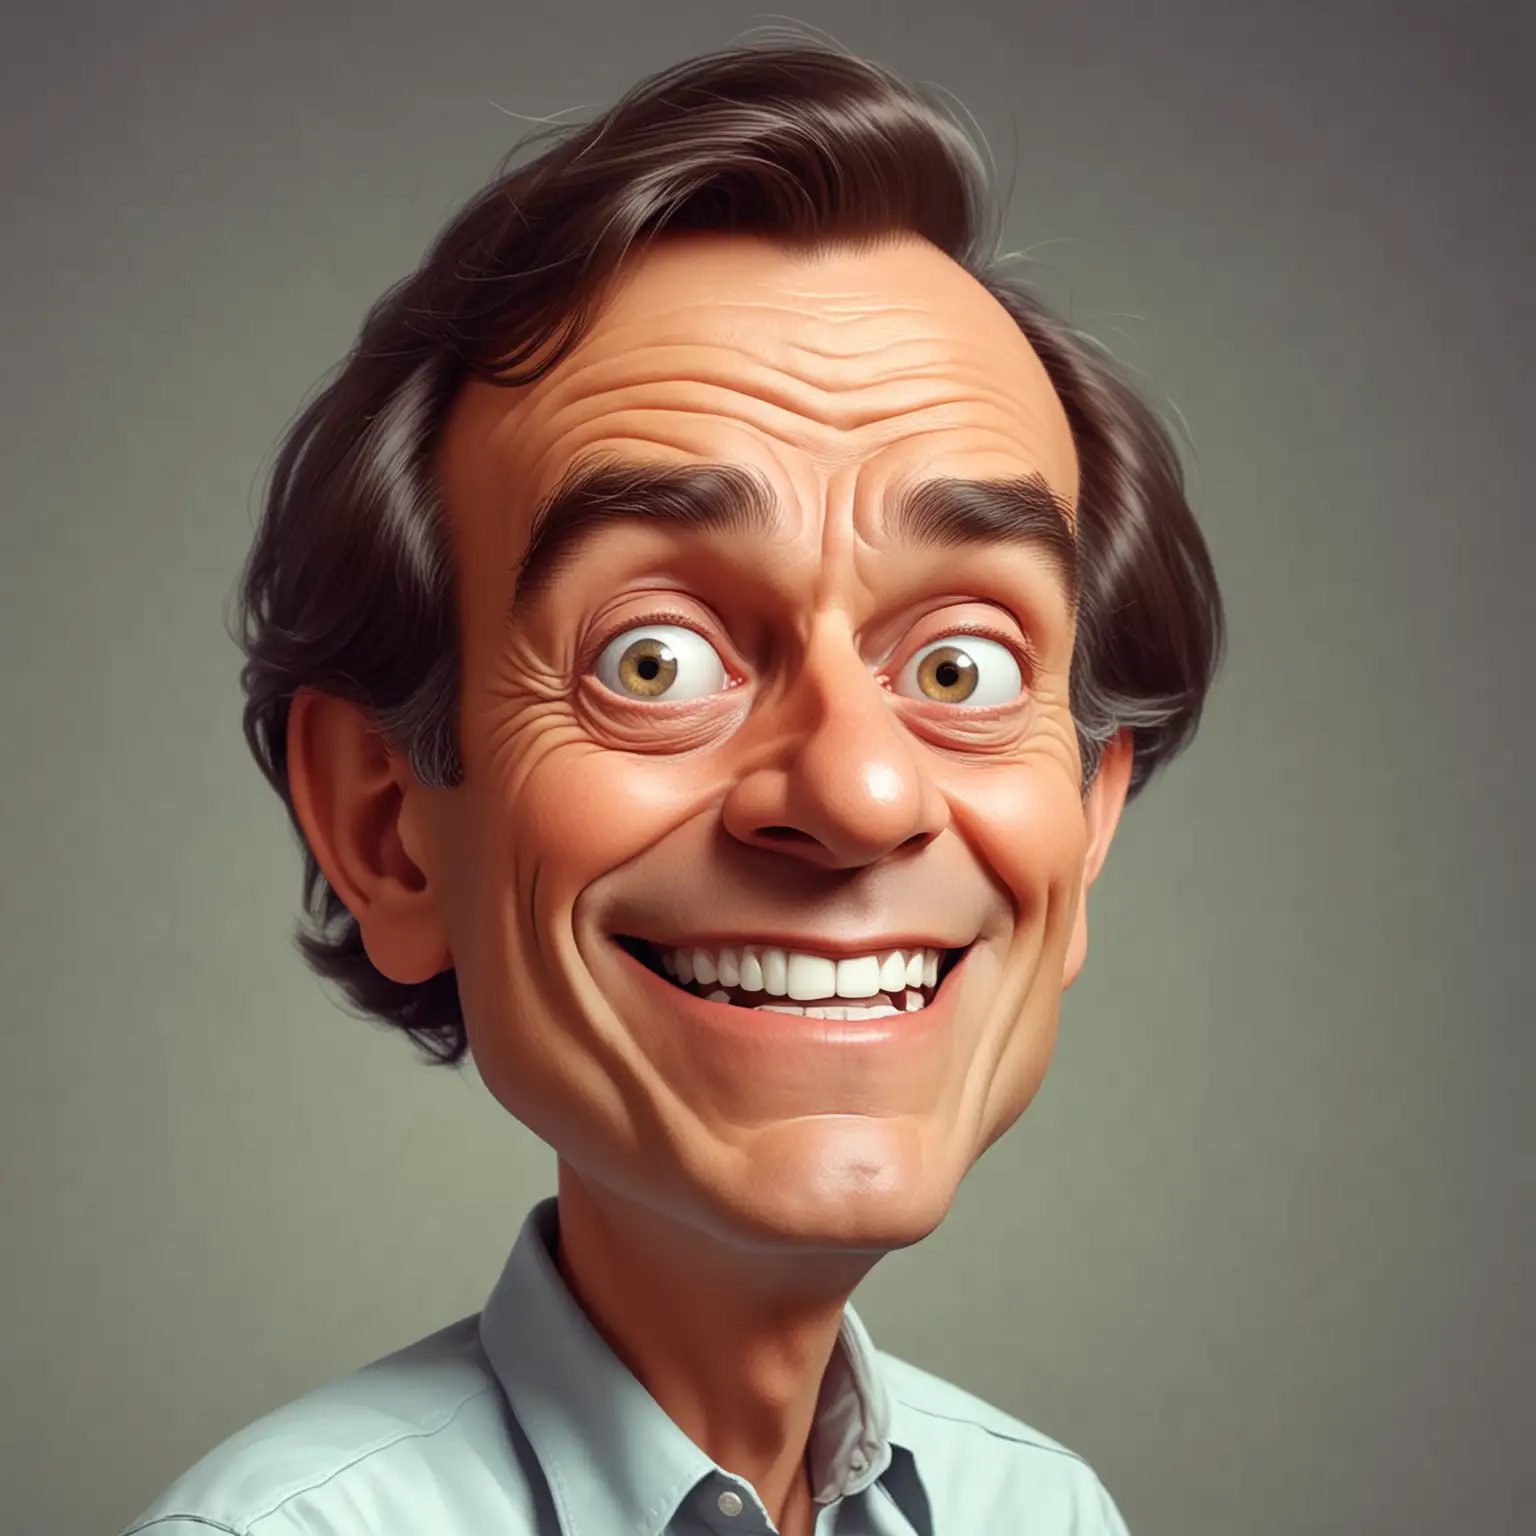 Cartoon Caricature of Richard Feynman with PixarStyle Humor